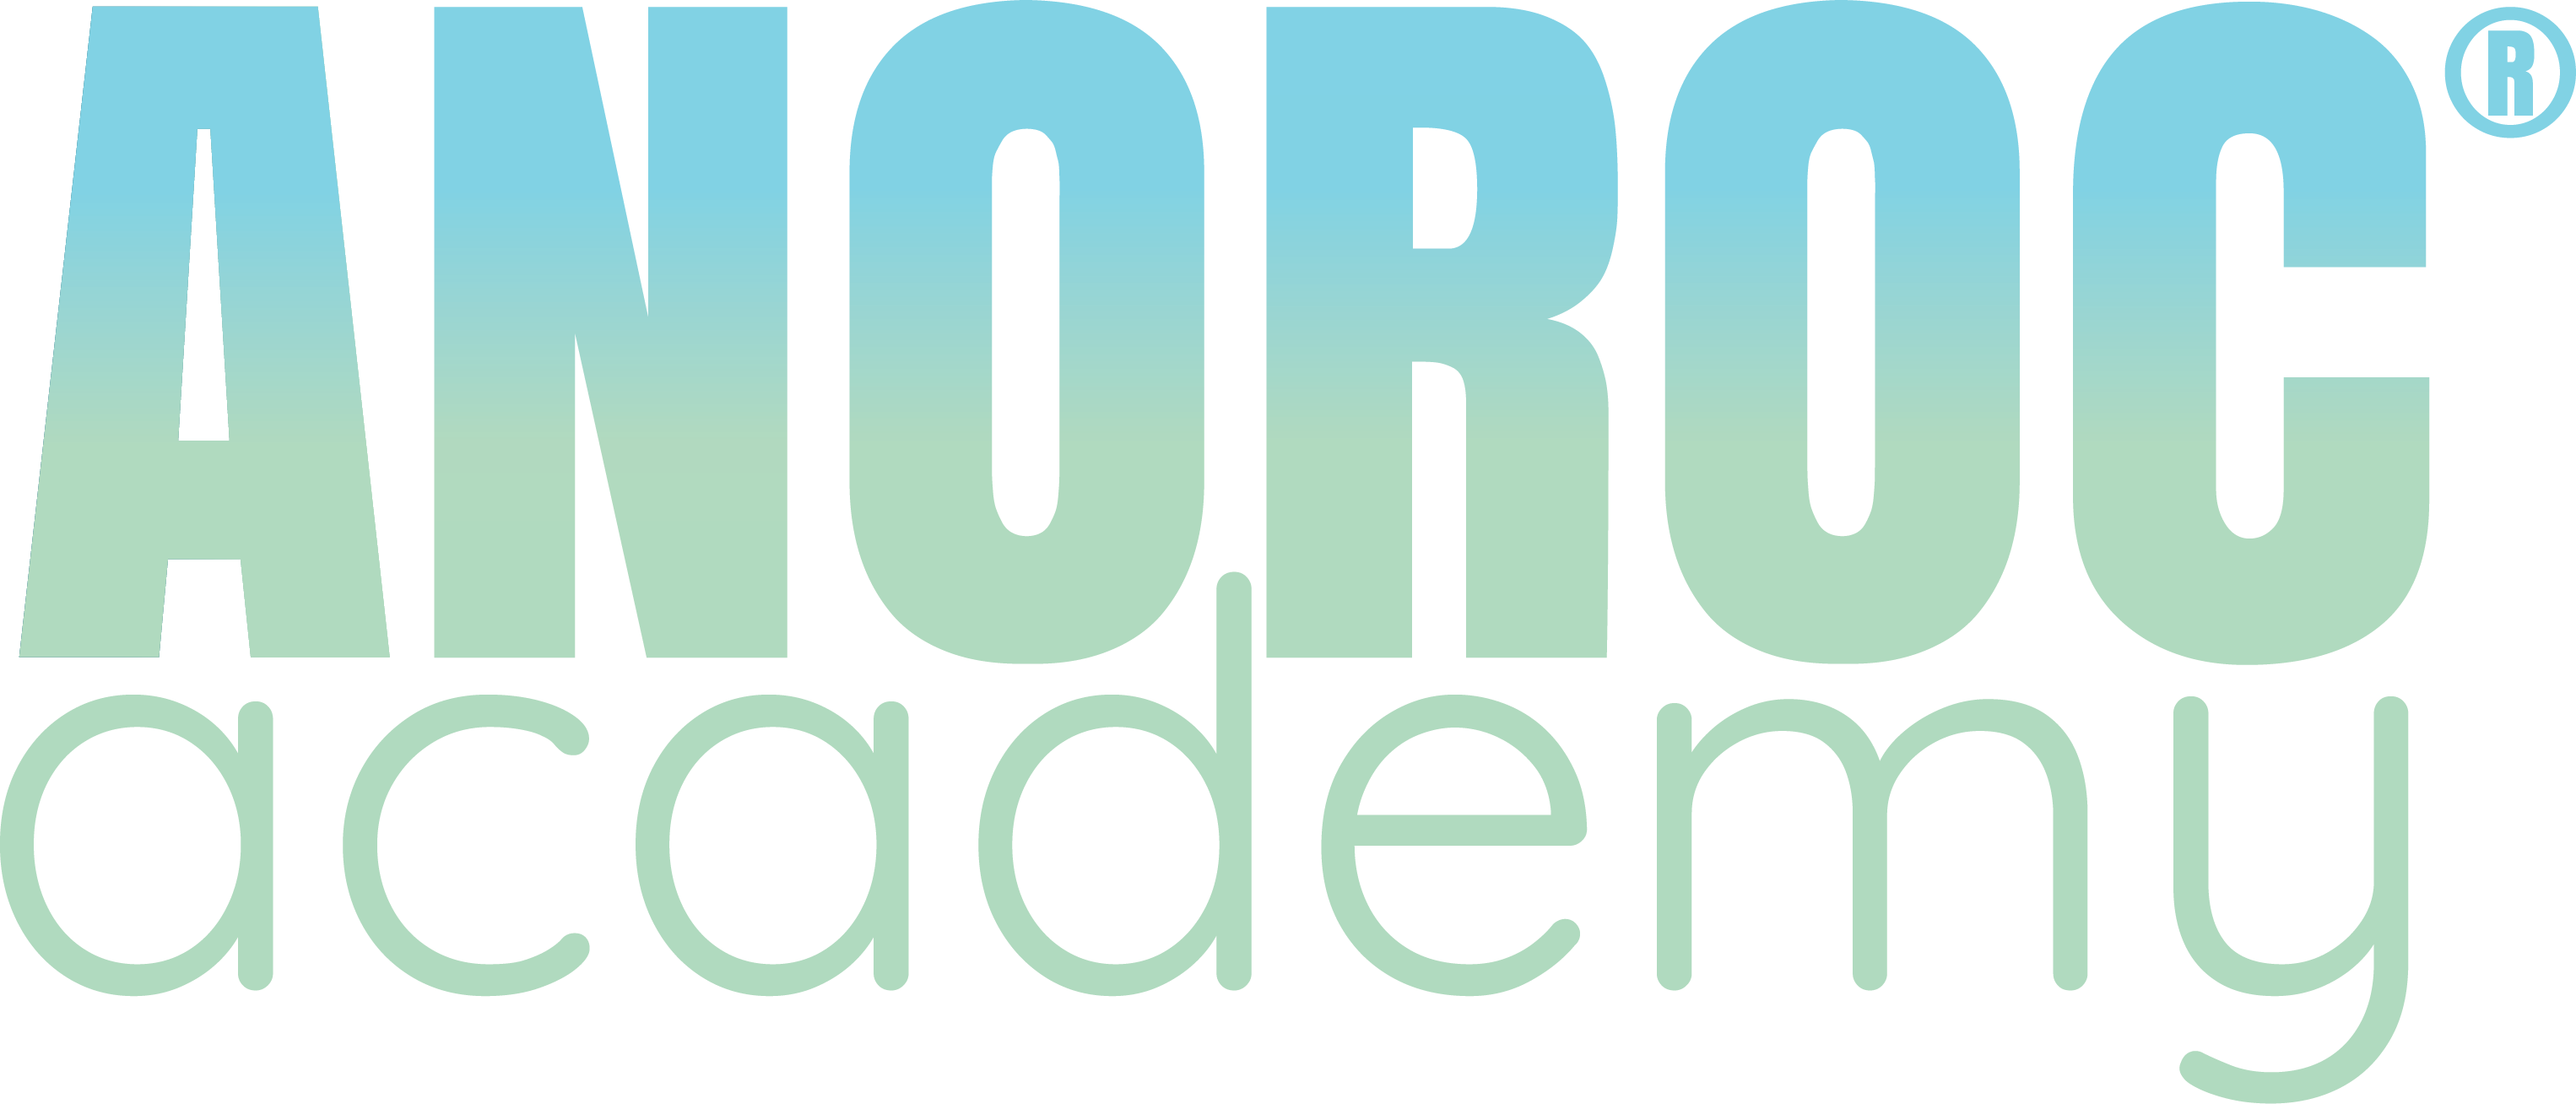 logo ANOROC academy